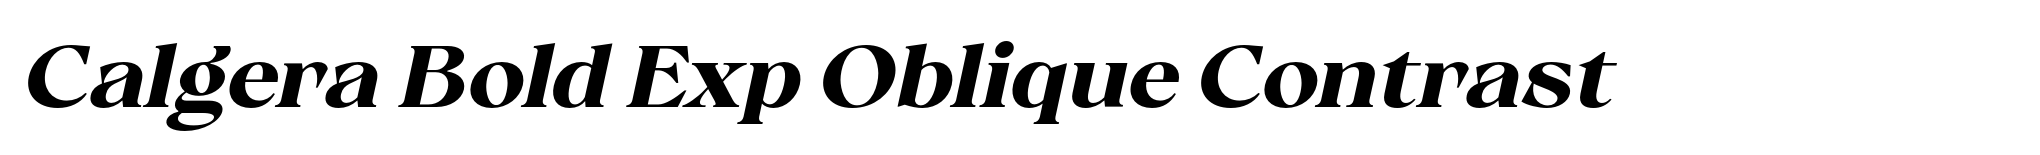 Calgera Bold Exp Oblique Contrast image